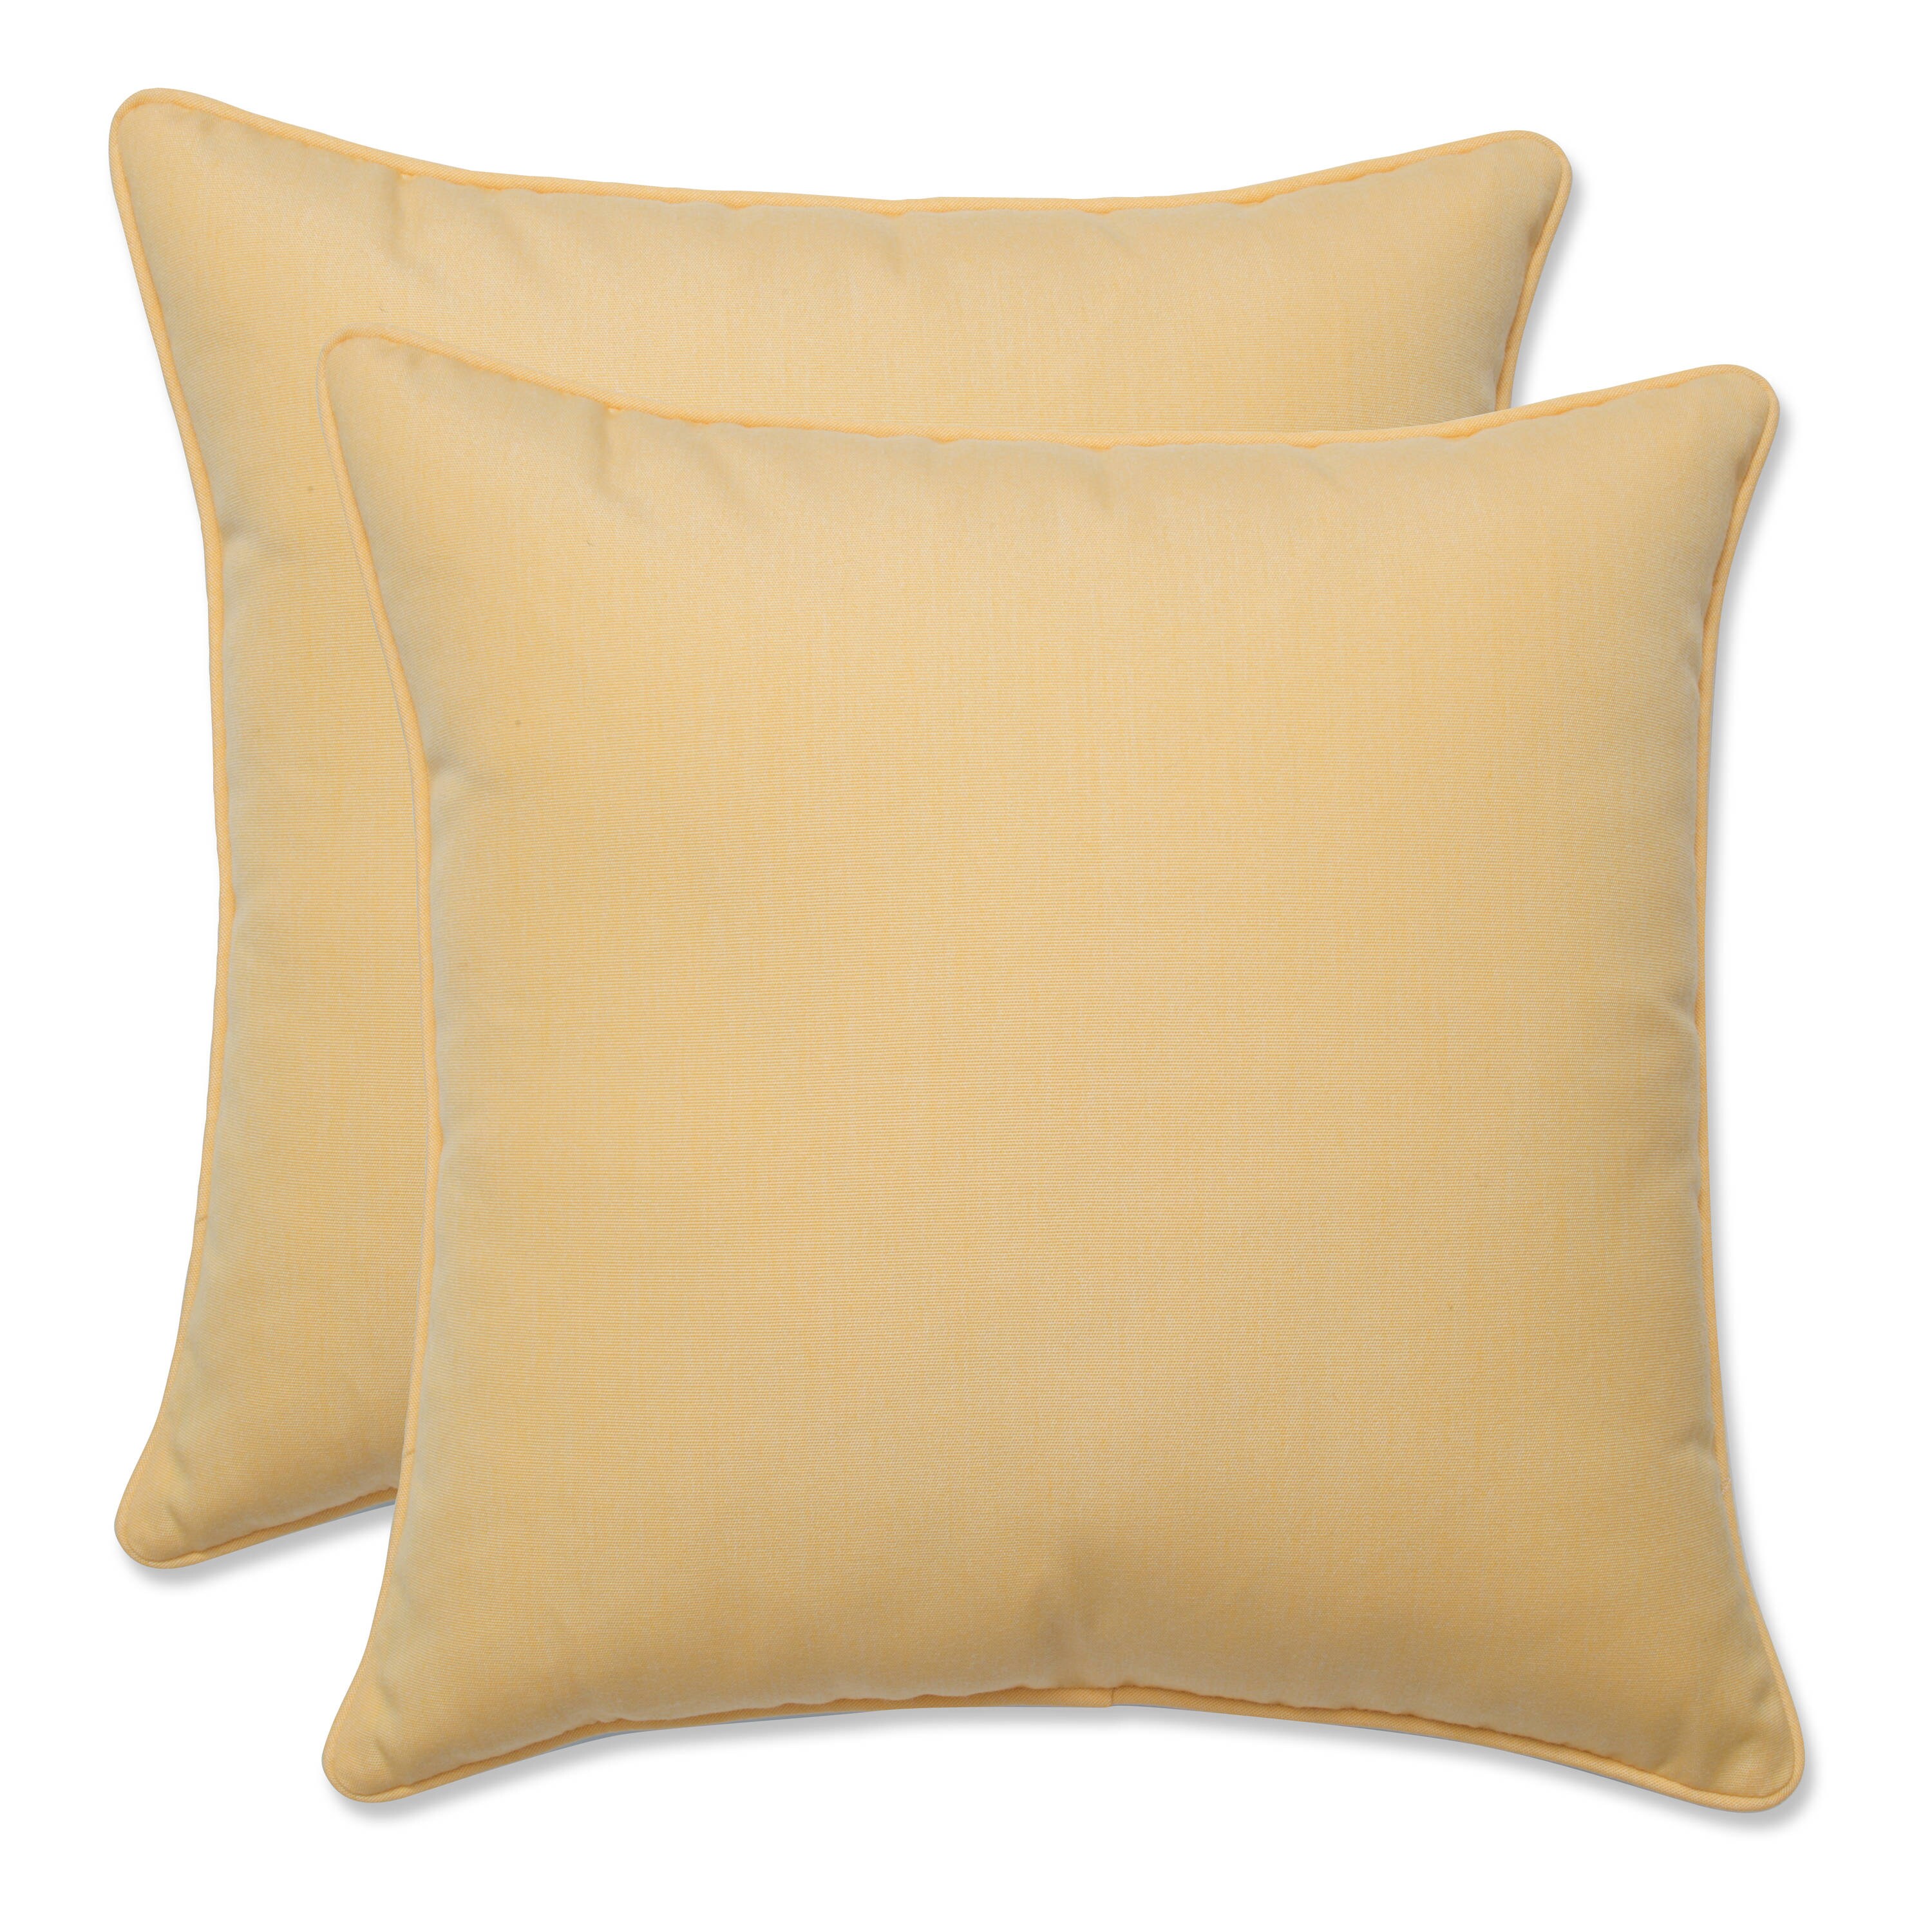 Set of 2  Outdoor Decorative Square Pillows Sunbrella Canvas Buttercup Yellow 